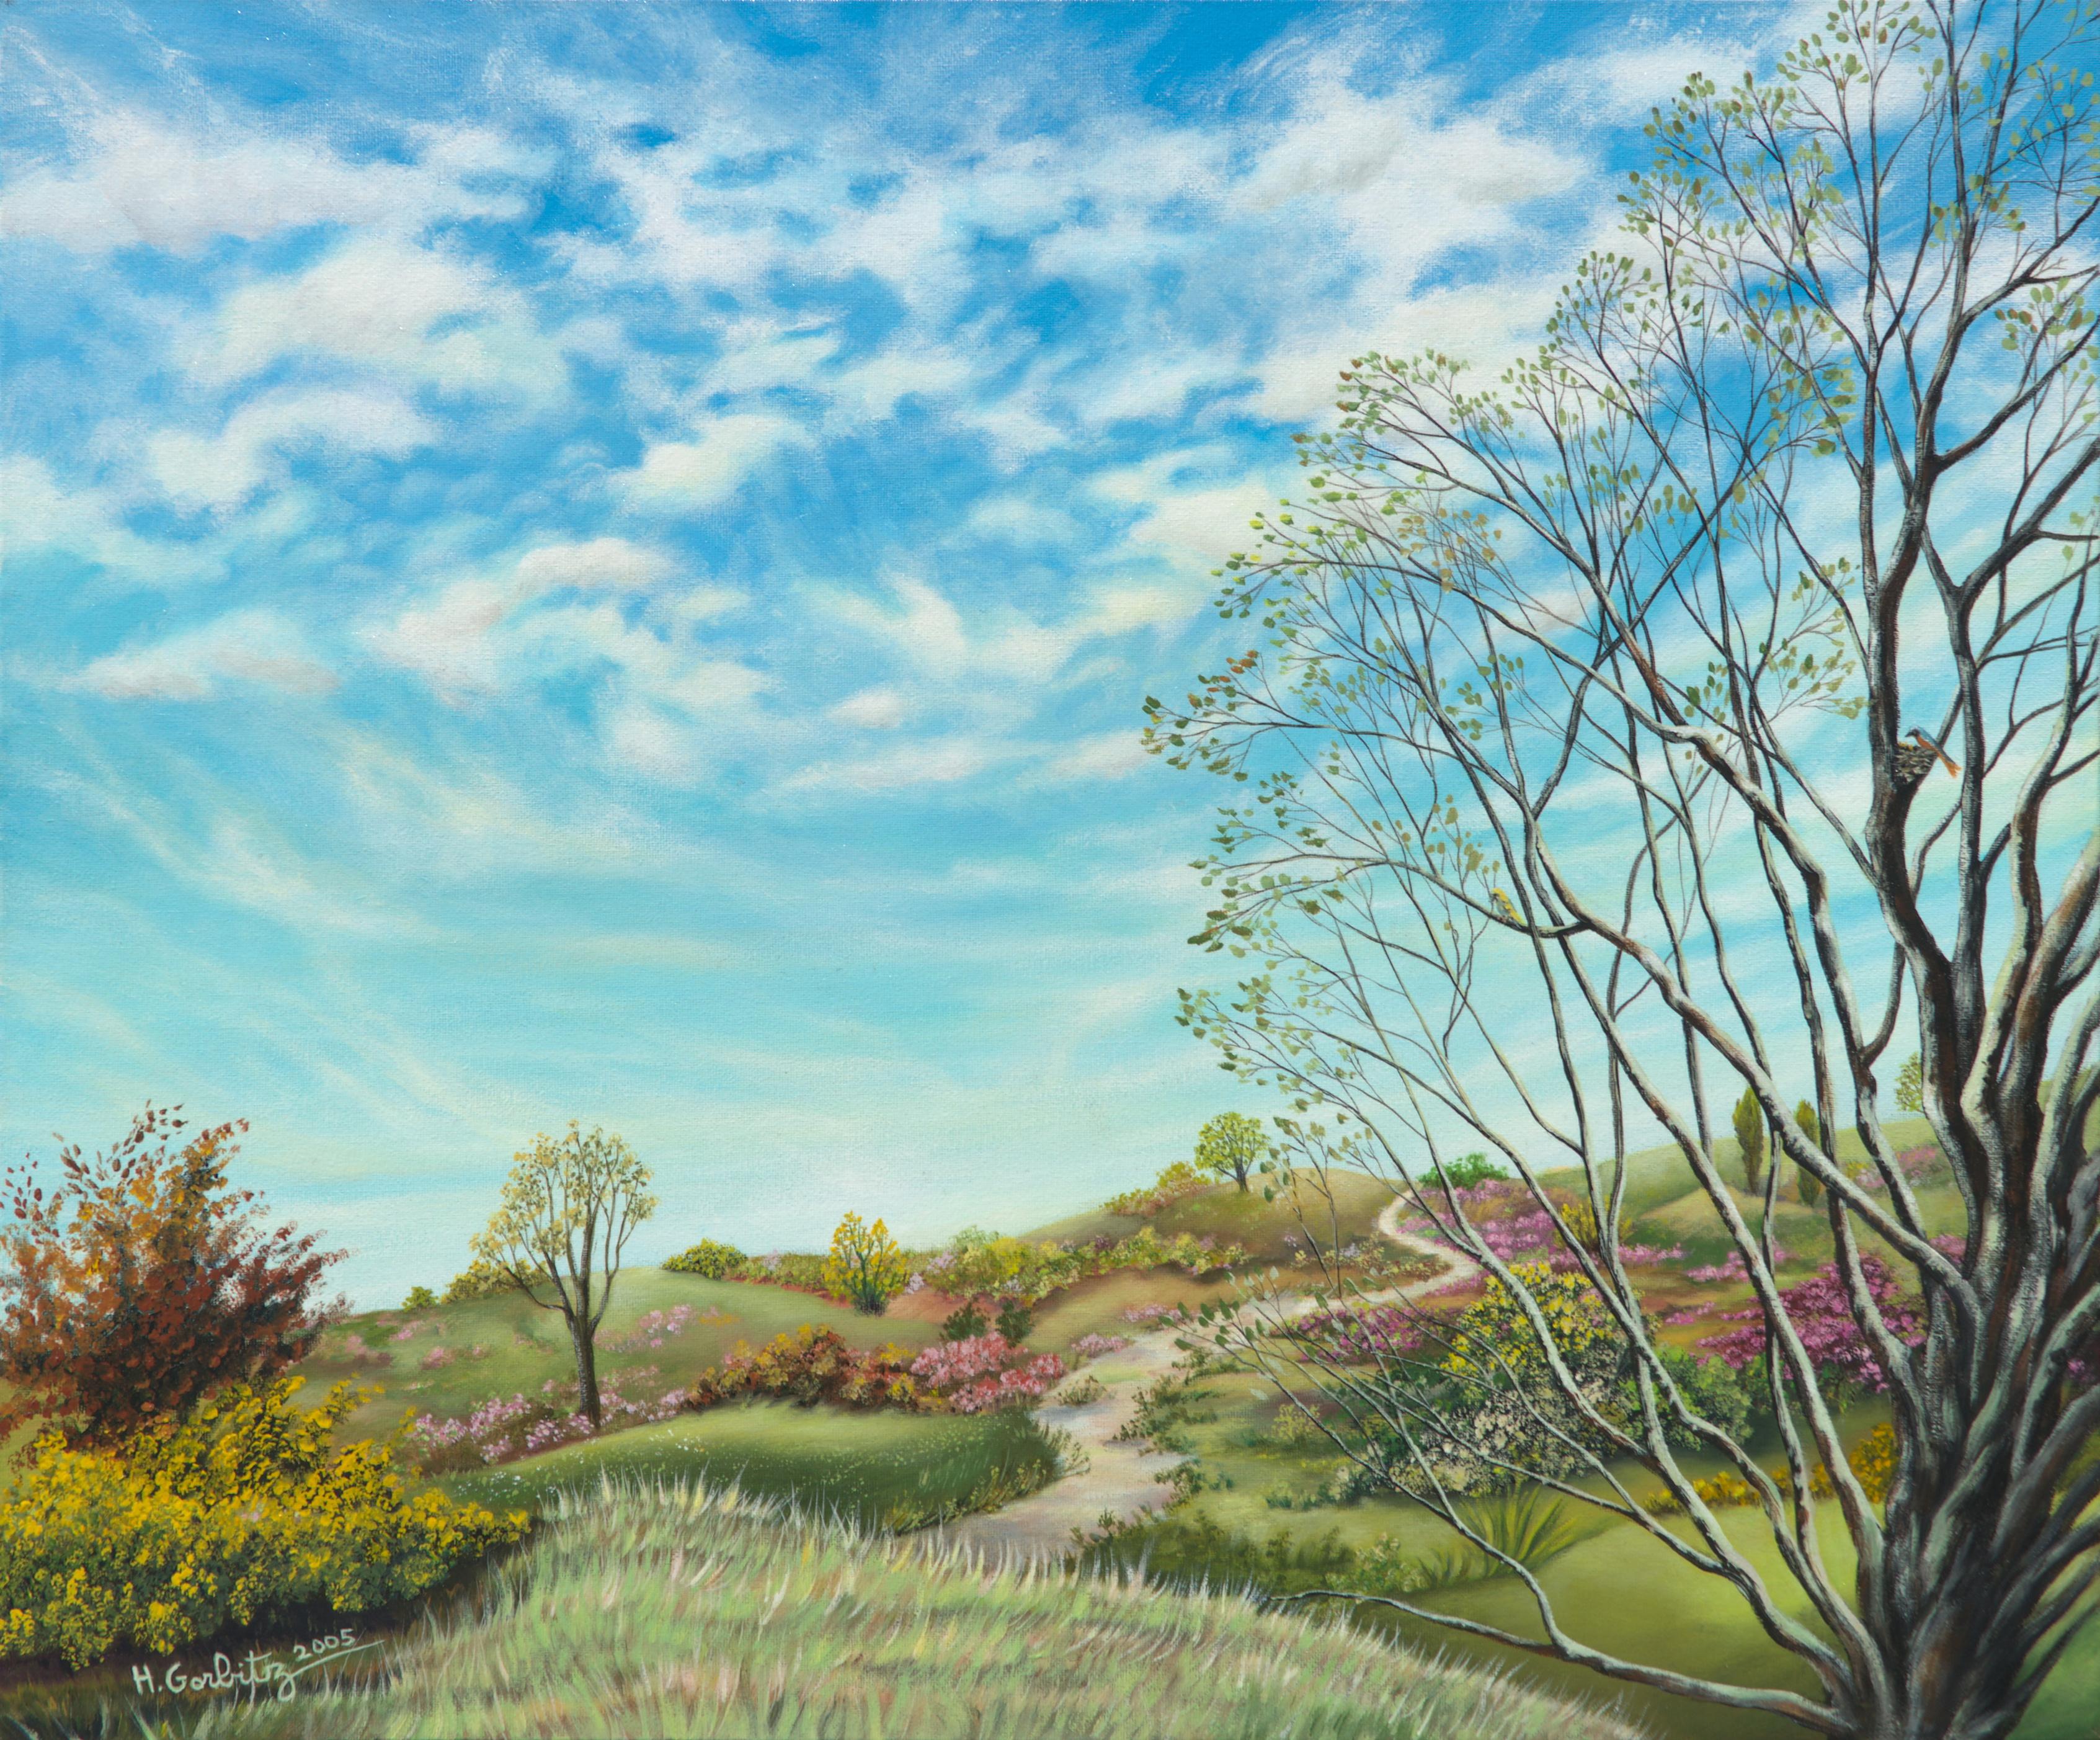 Henriette Gorbitz Landscape Painting - "Nowhere Path", Flowered Landscape with Clouds Naive Primitive Acrylic Painting